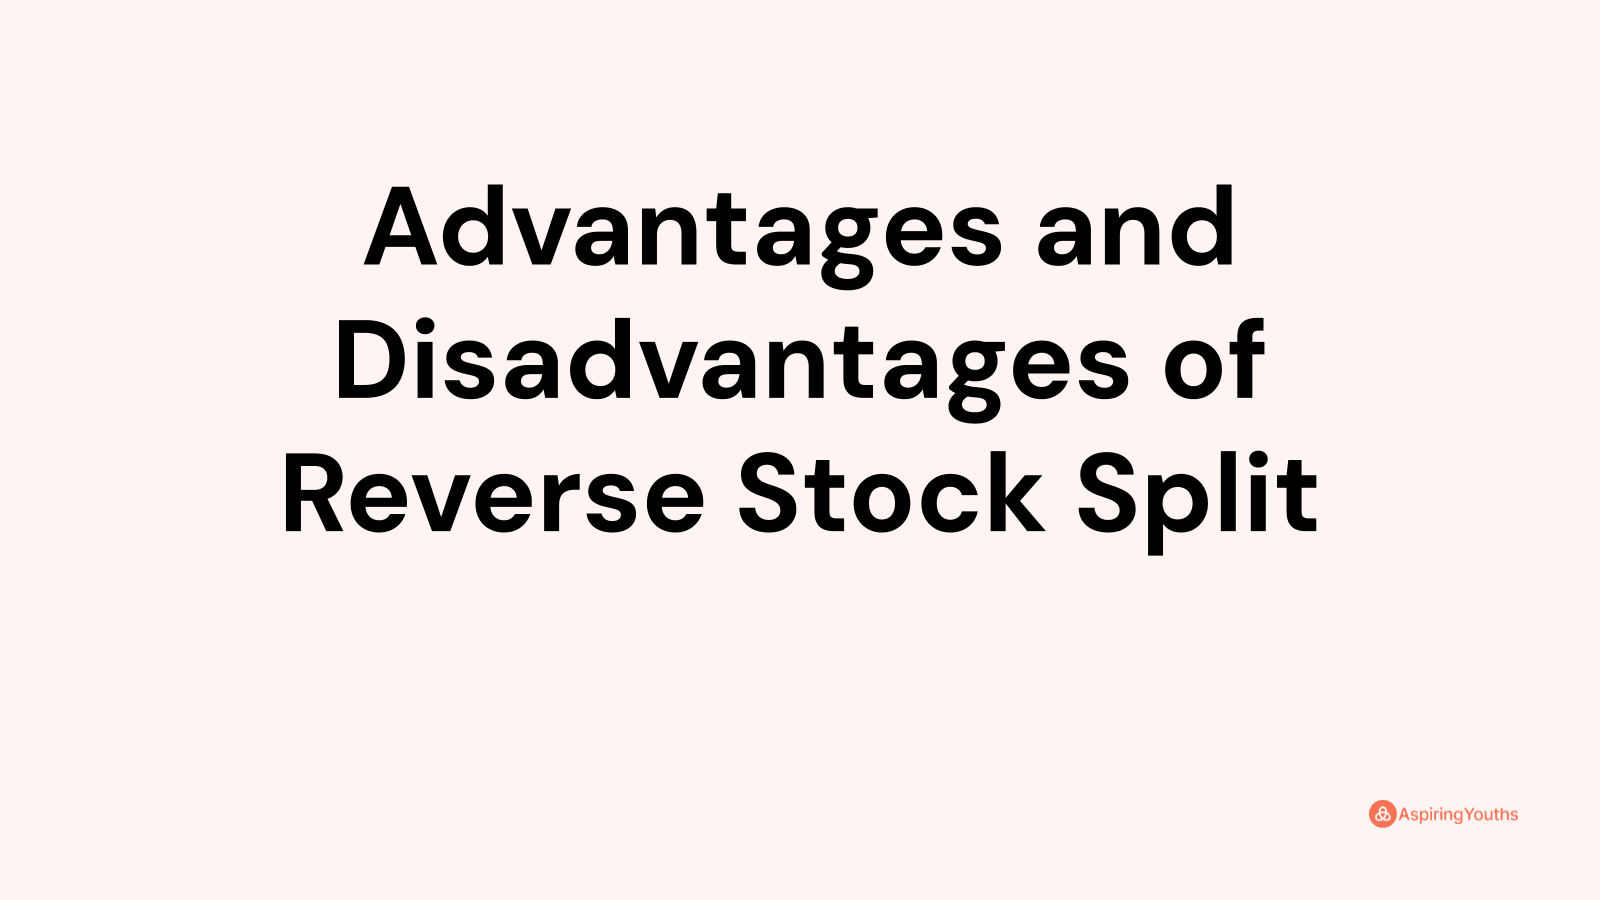 Advantages and disadvantages of Reverse Stock Split